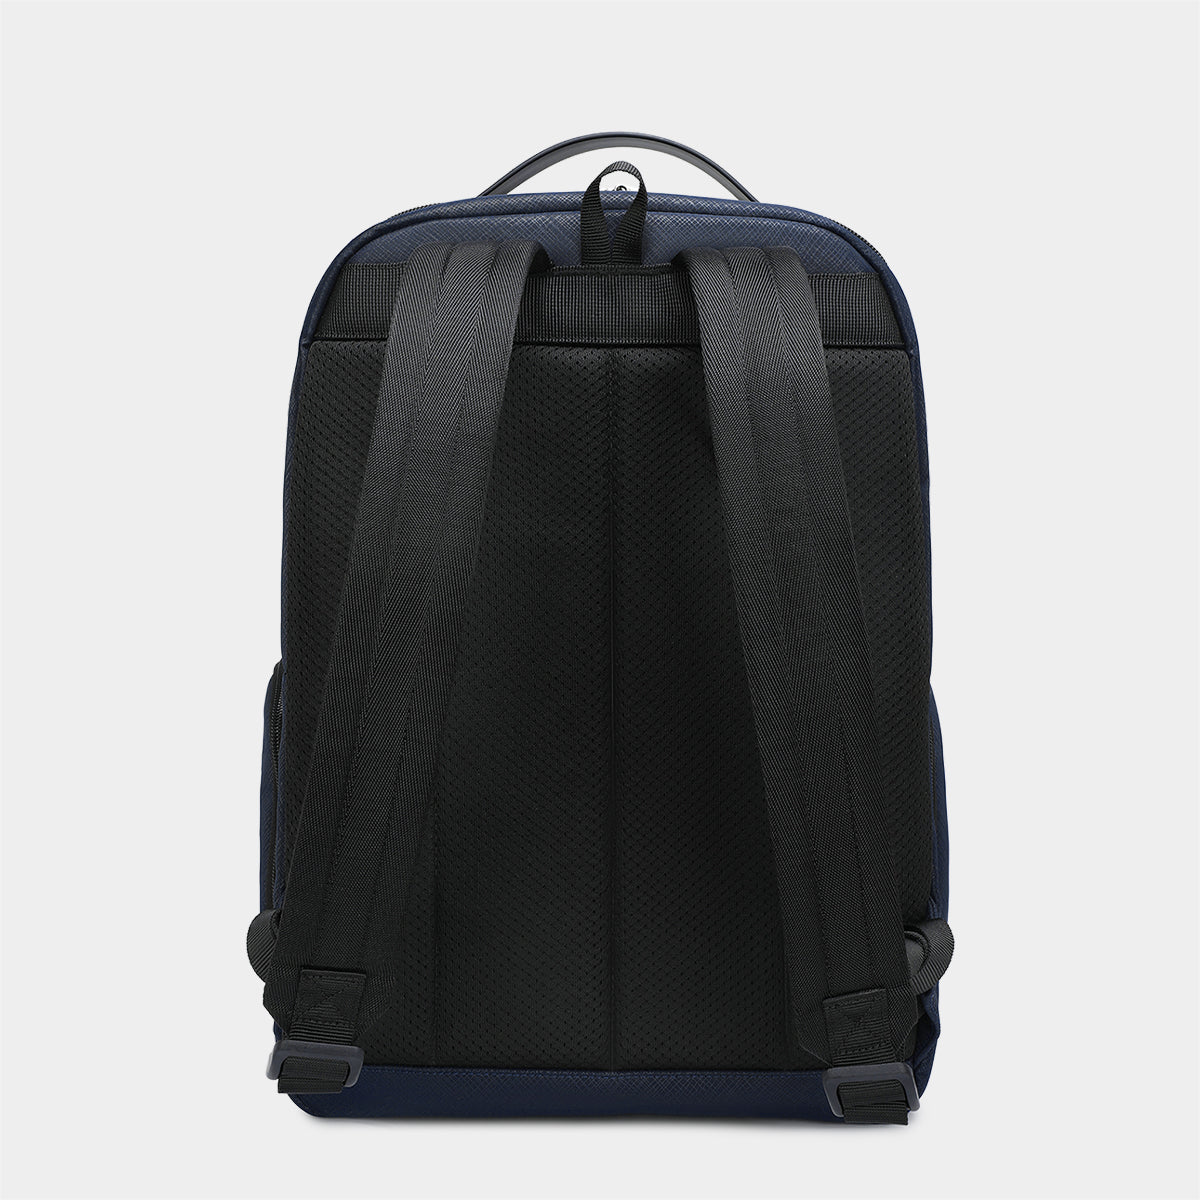 Tigernu T-B9055 Anti Theft 15.6 inch Laptop Travel Office School Backpack Bag